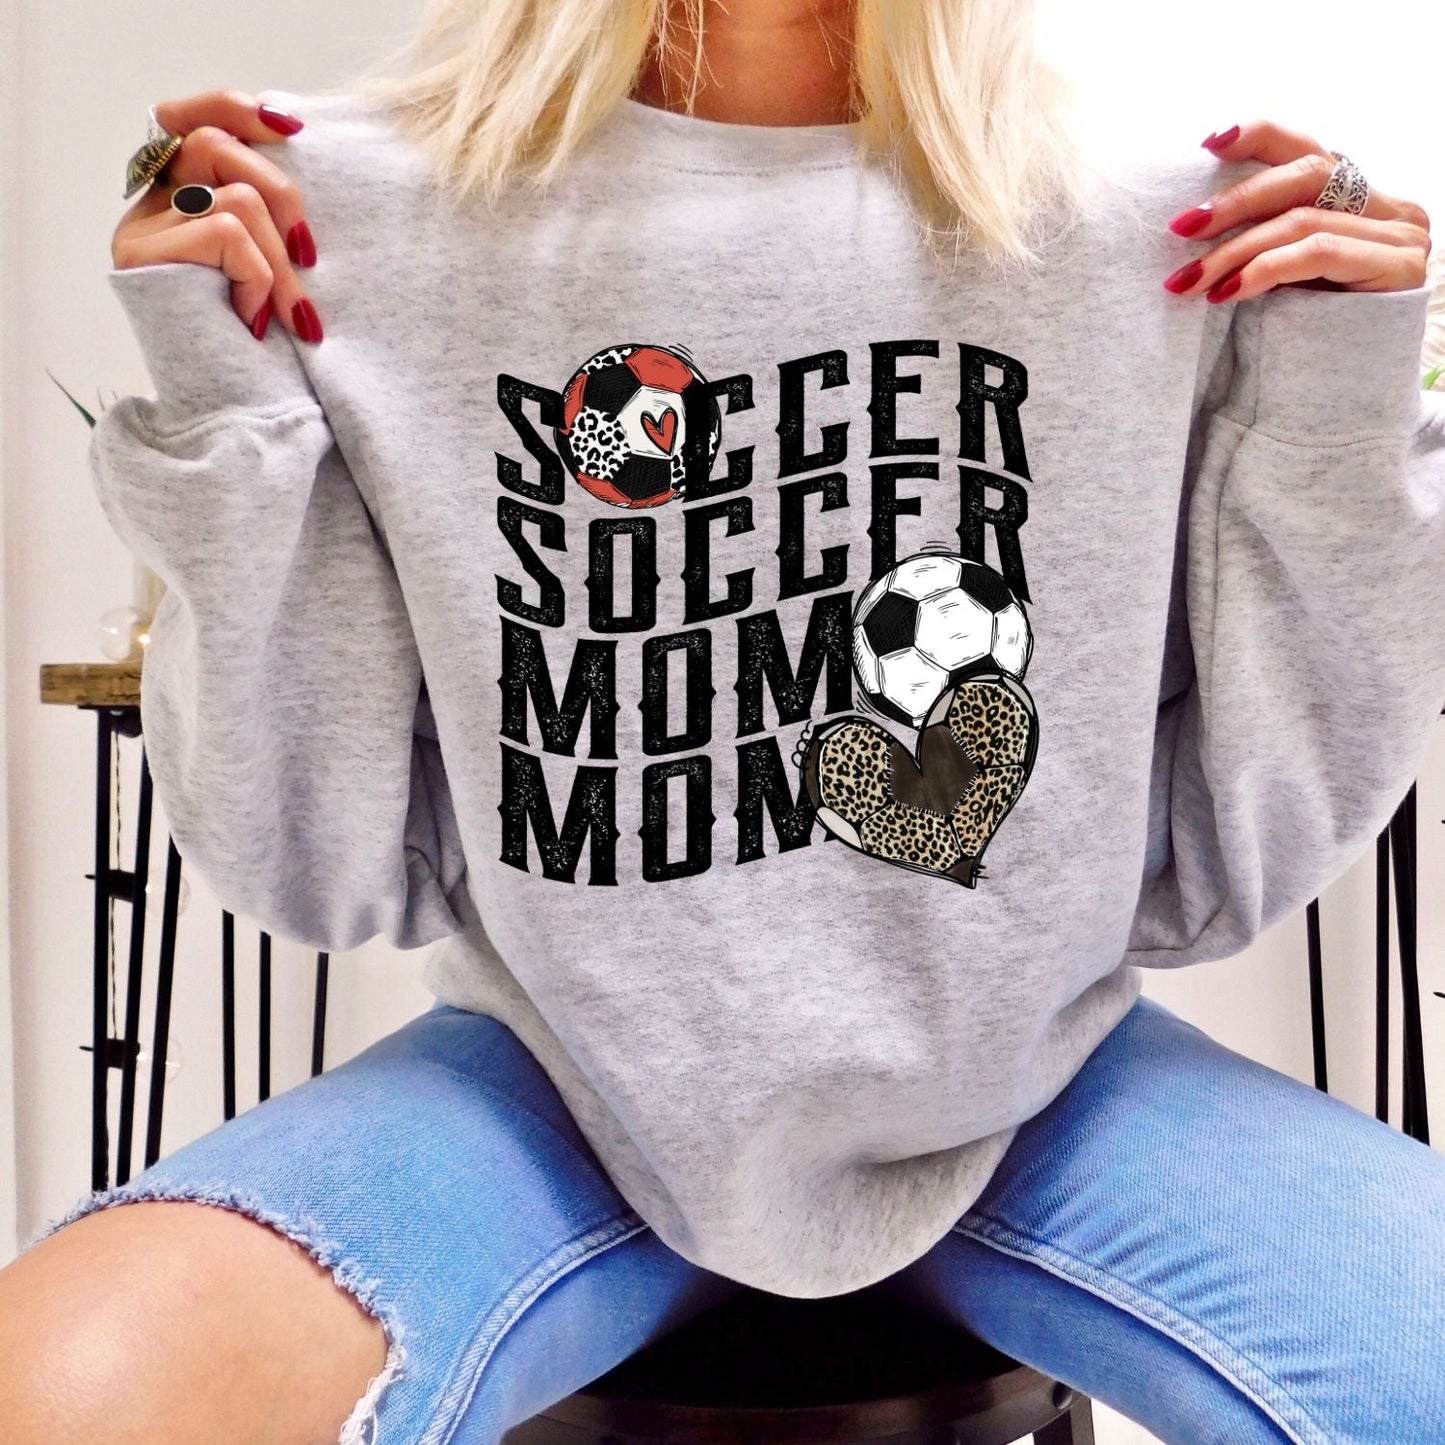 Soccer Mom Sweatshirt